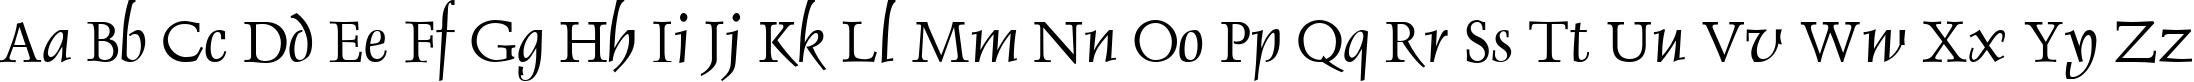 Пример написания английского алфавита шрифтом Dauphin